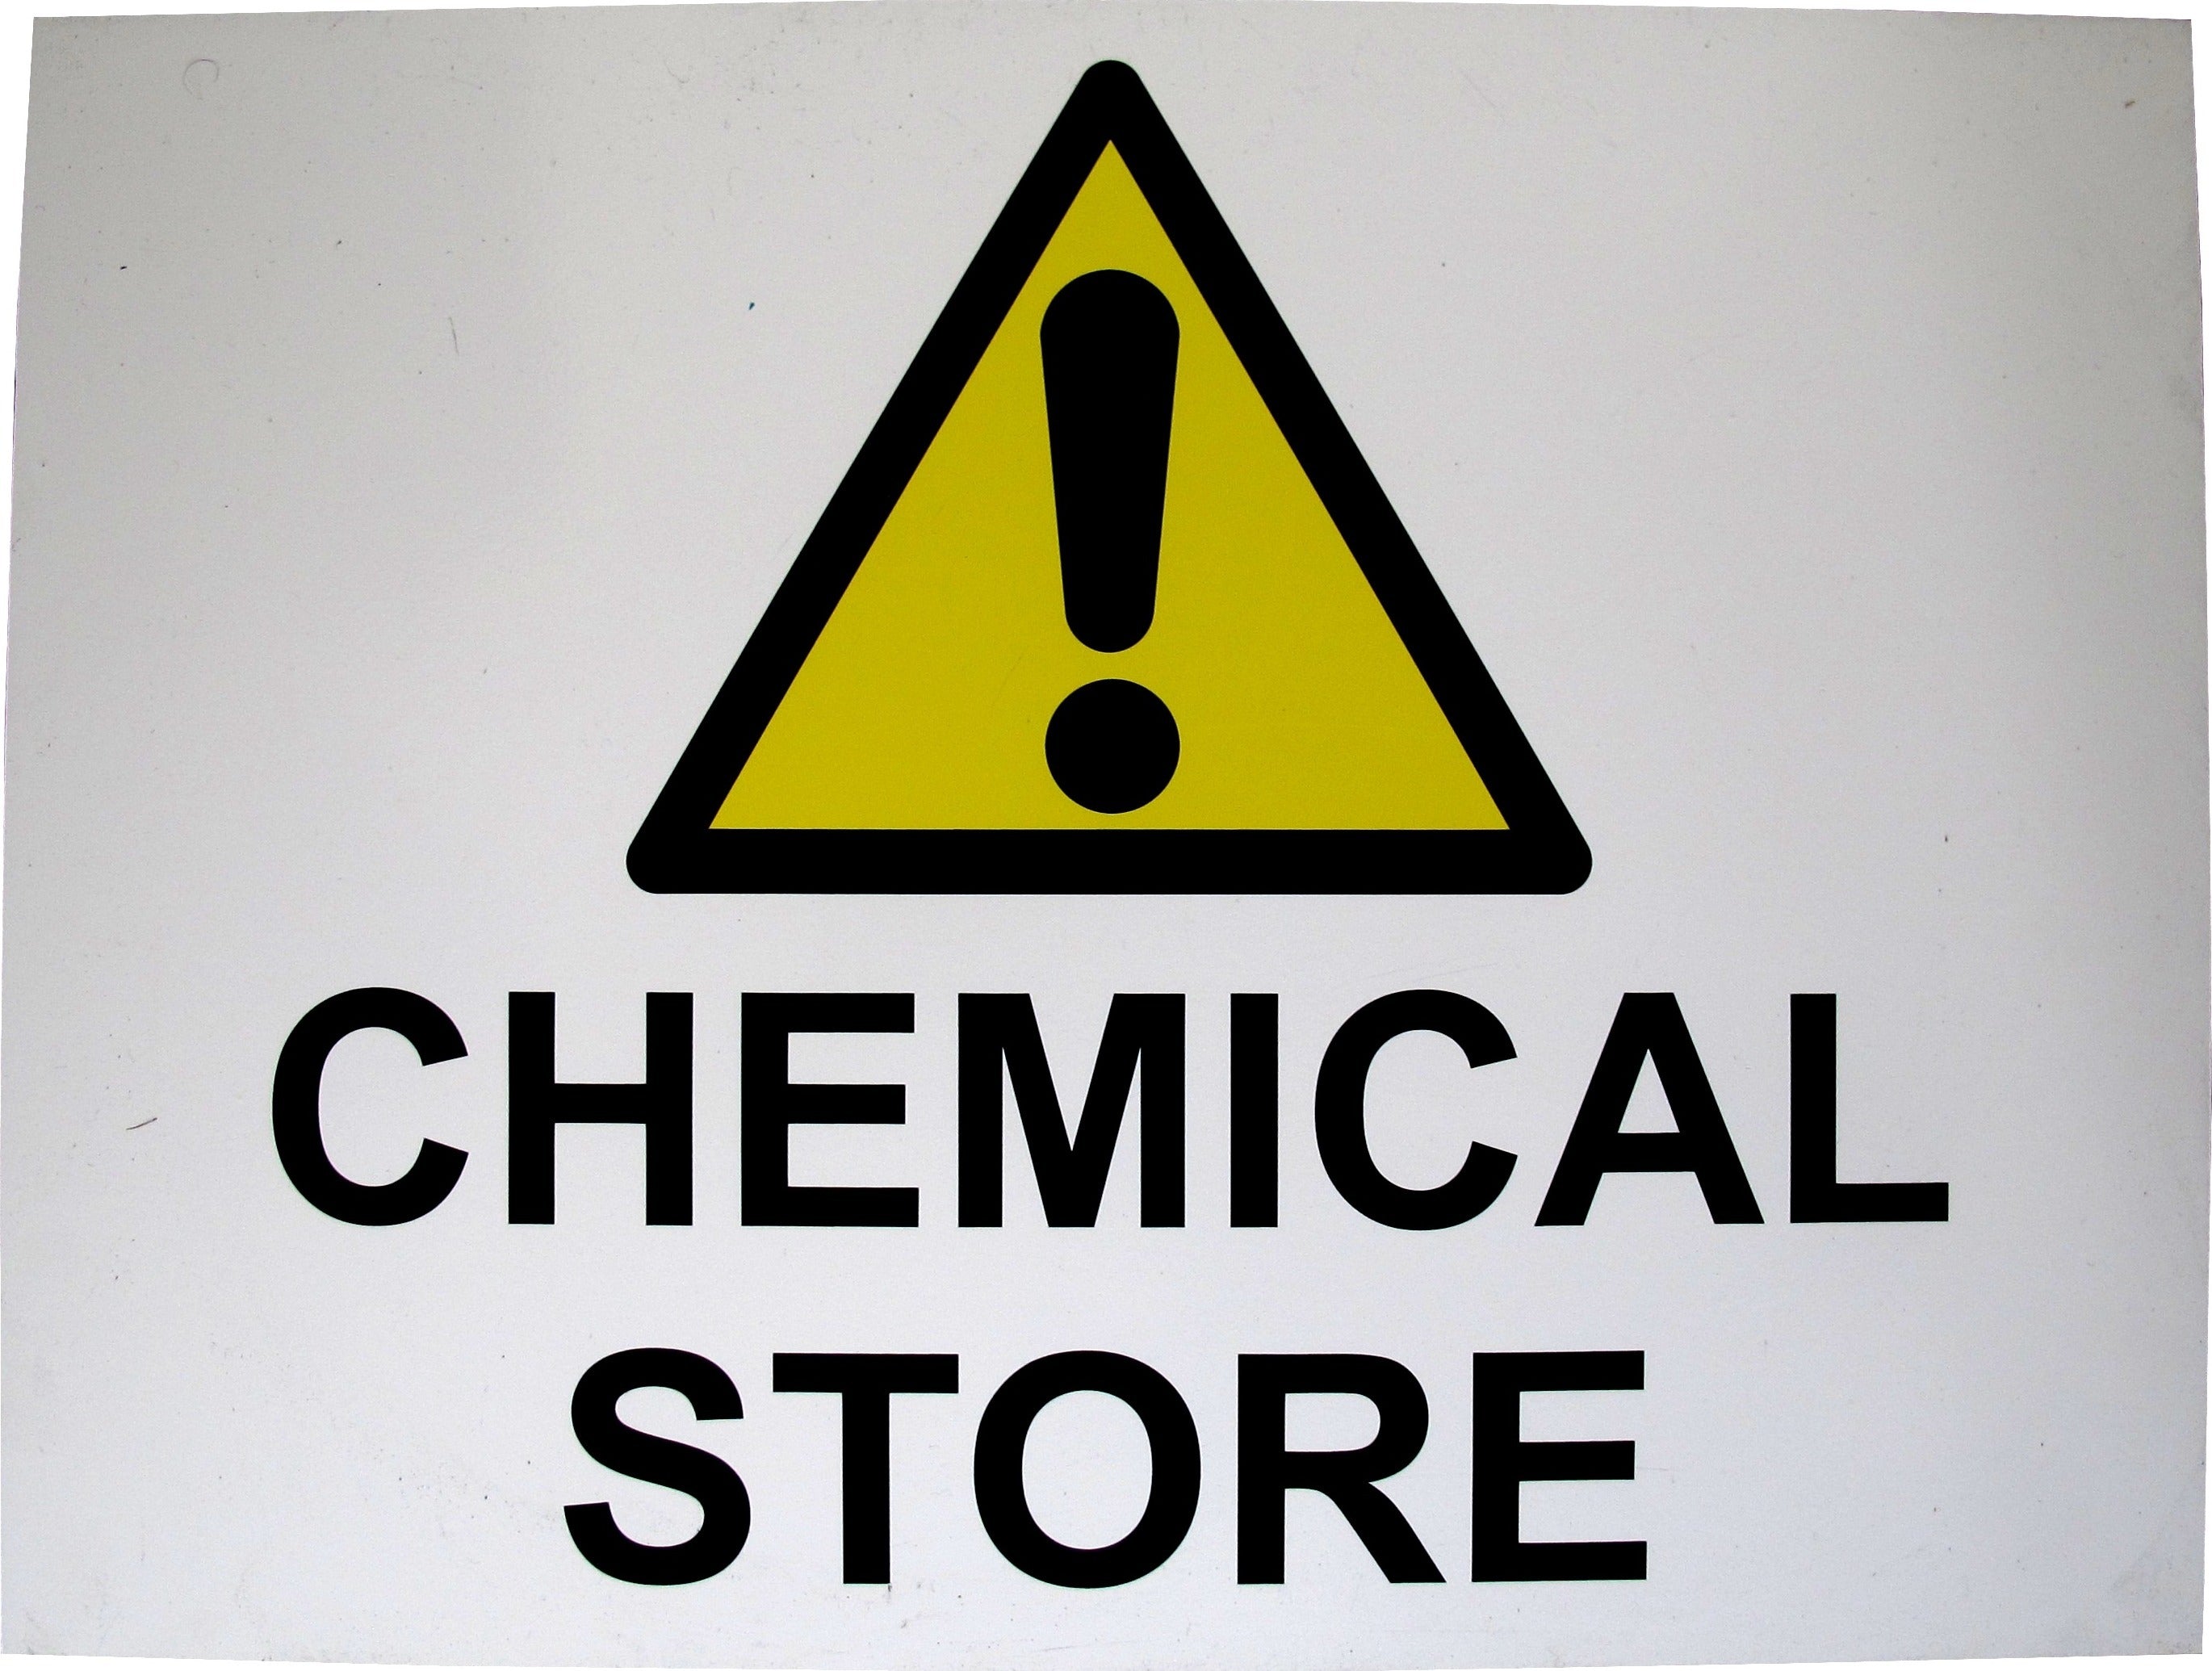 Spraying & Chemical Store Warning Sign